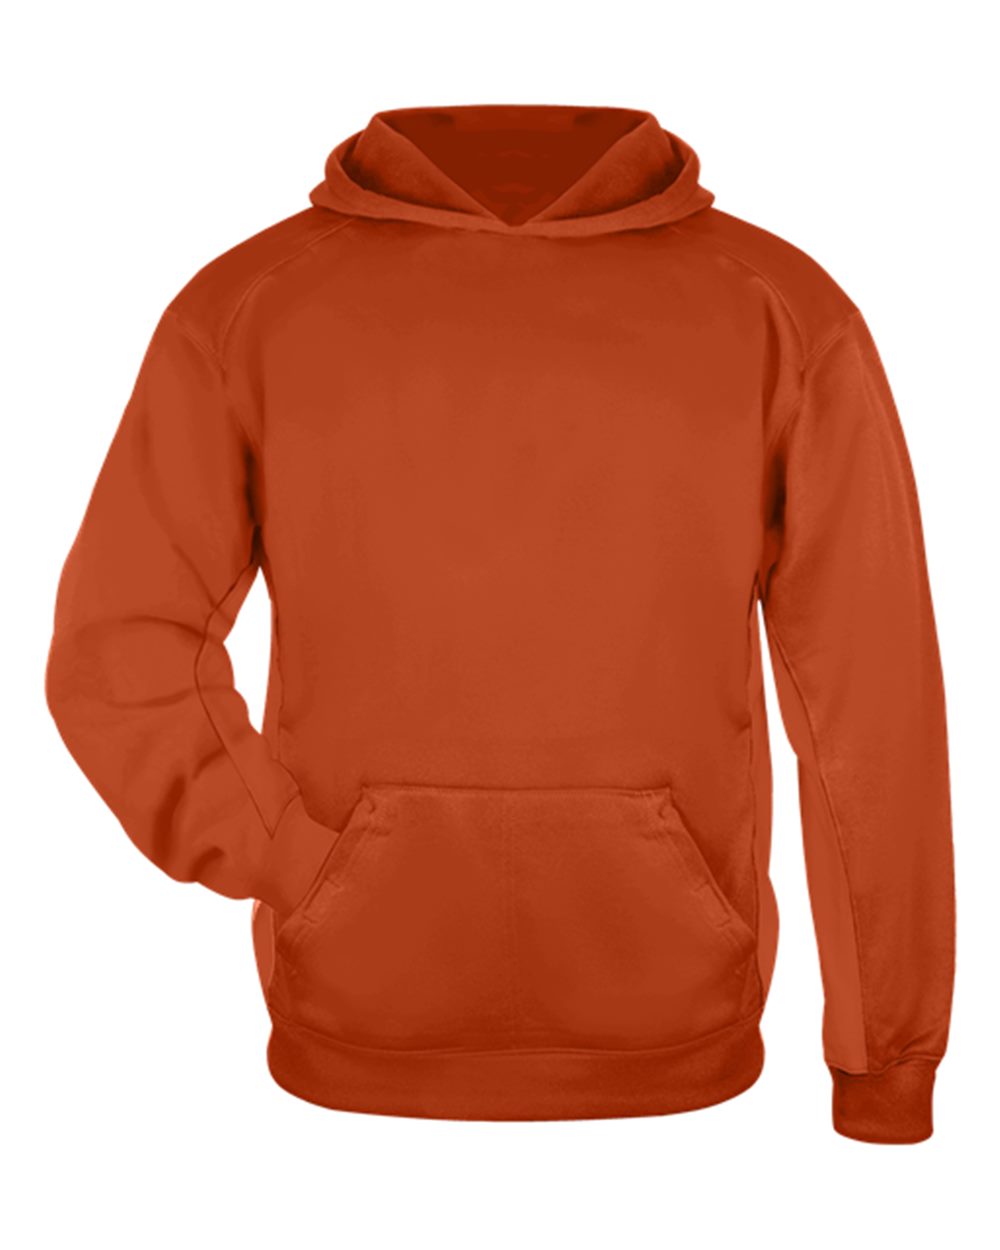 Badger 2454 - BT5 Youth Fleece Pullover Hood $28.59 - Sweatshirts